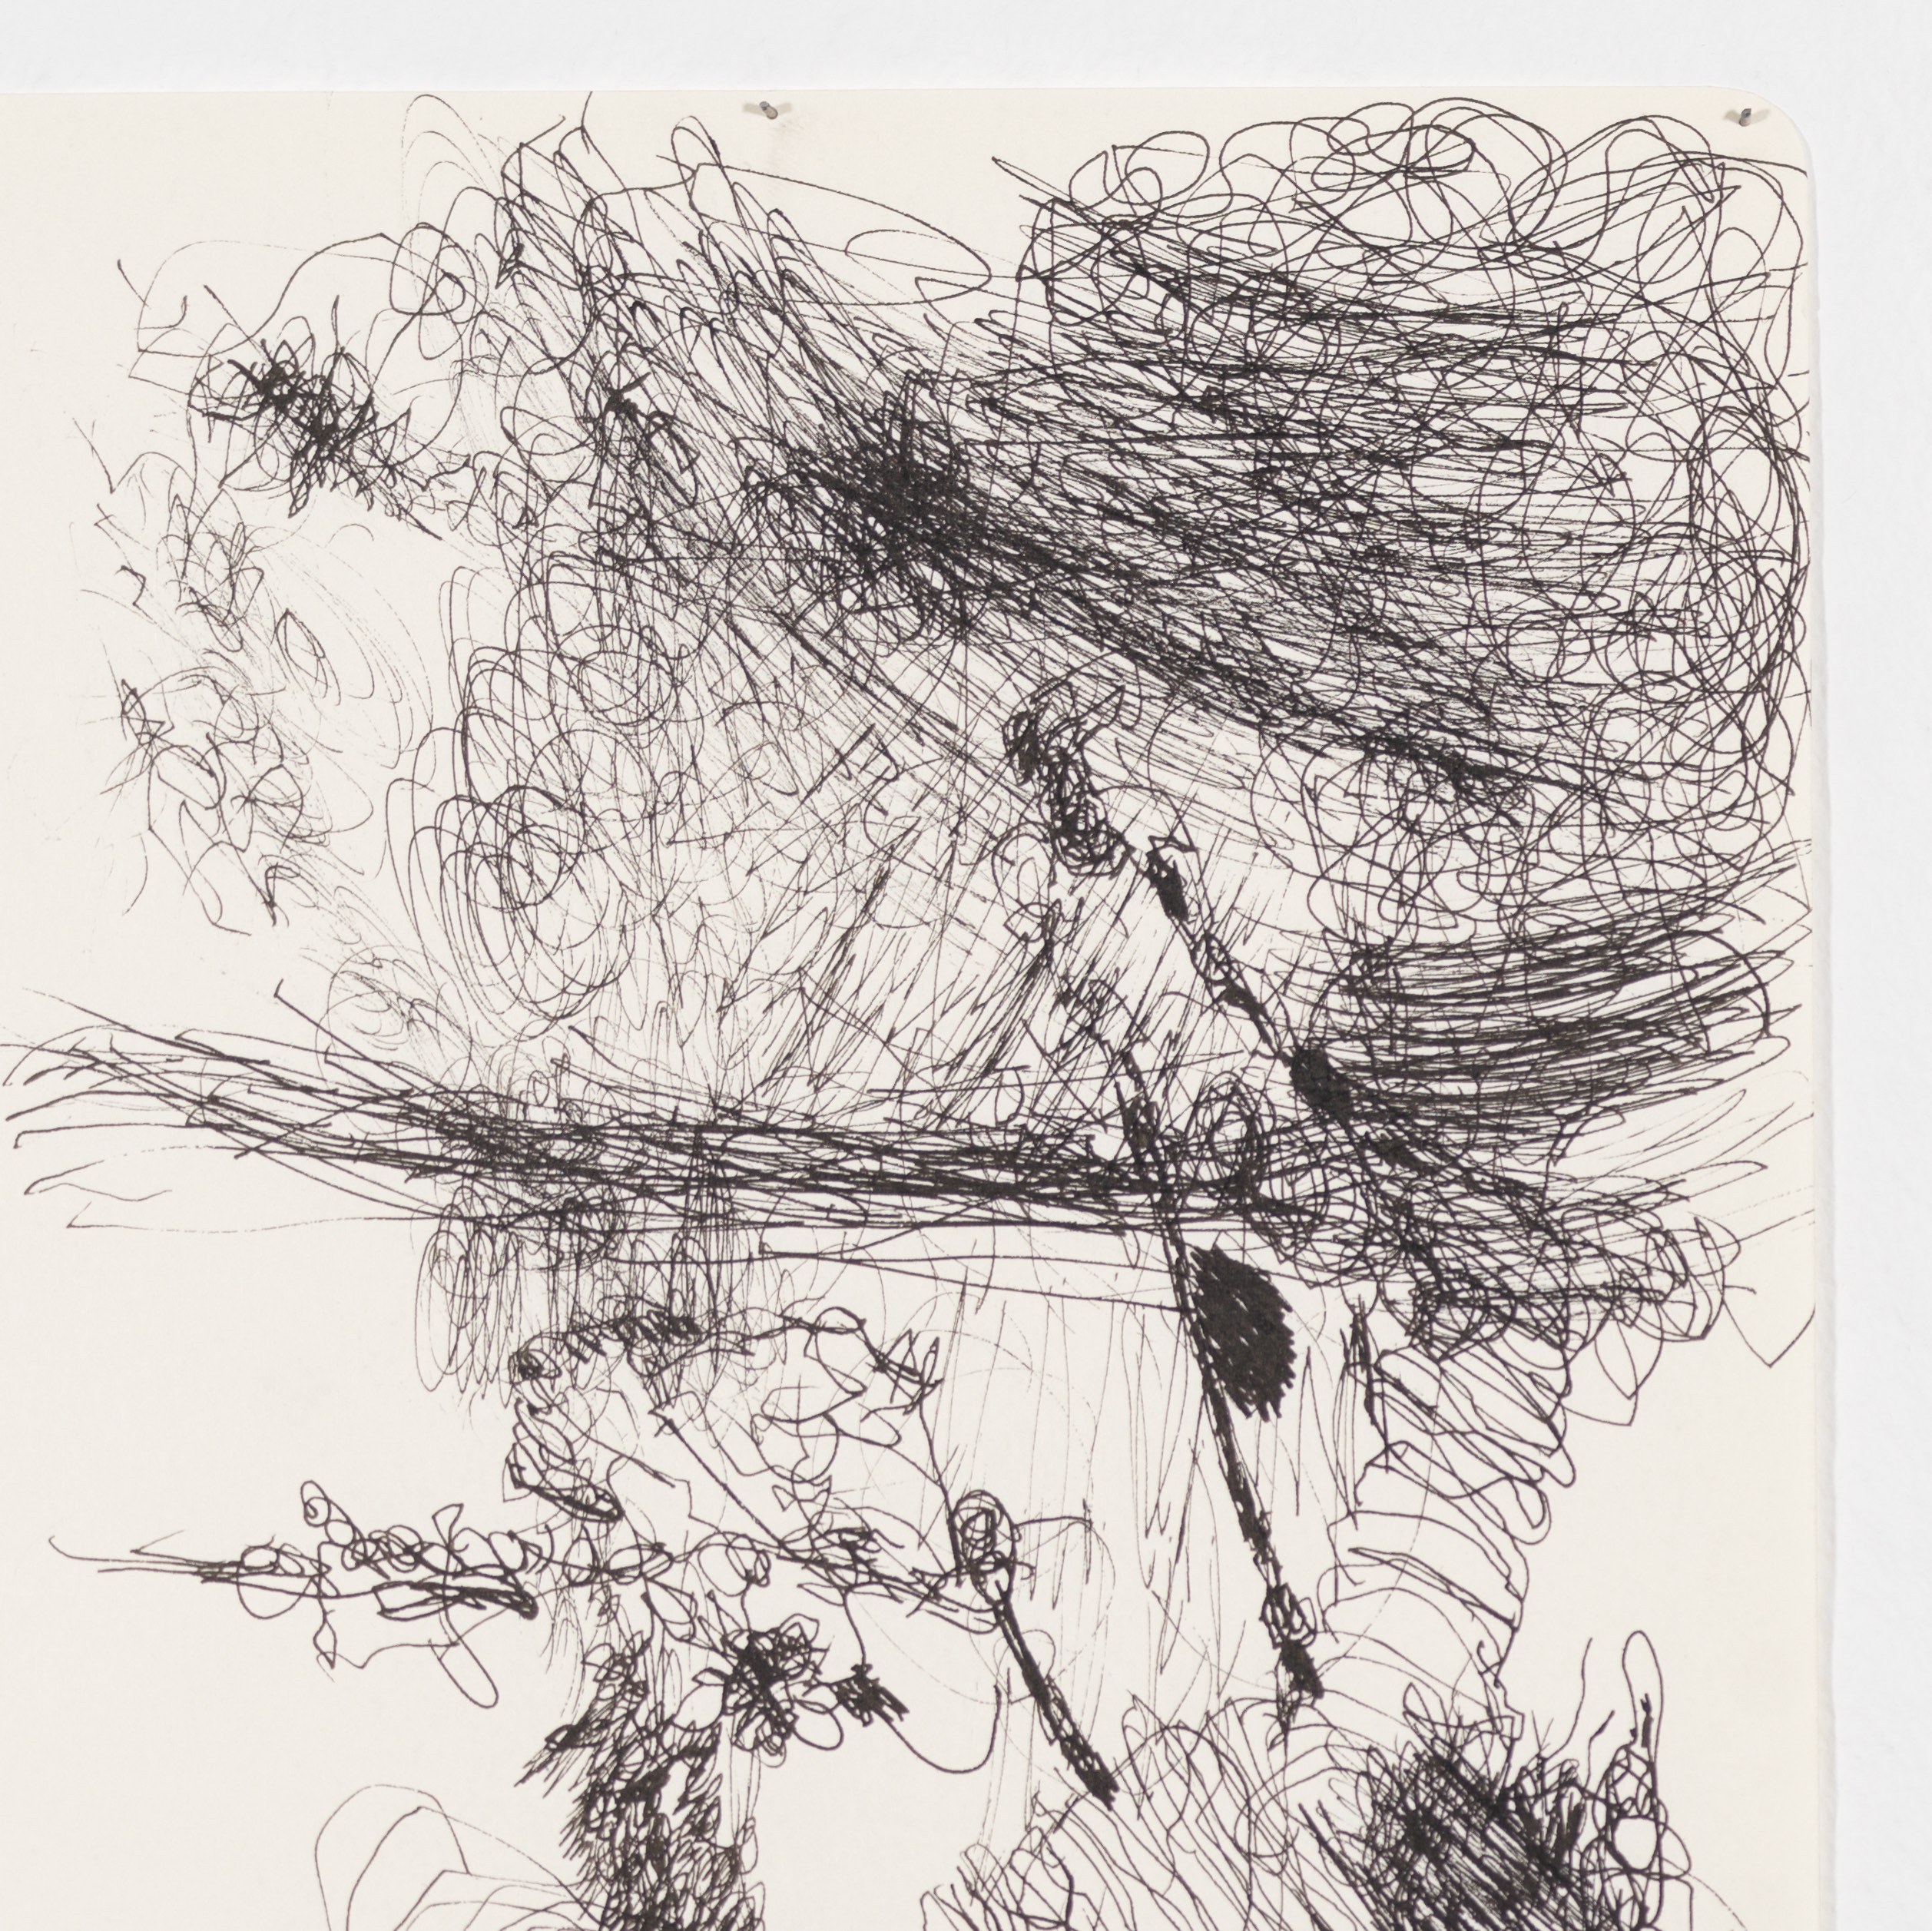 Javier Alvarez Sagredo, "Untitled (Trampa)", 2022. Ball-pen on paper, diptych 18.0 x 25.0 cm (each)